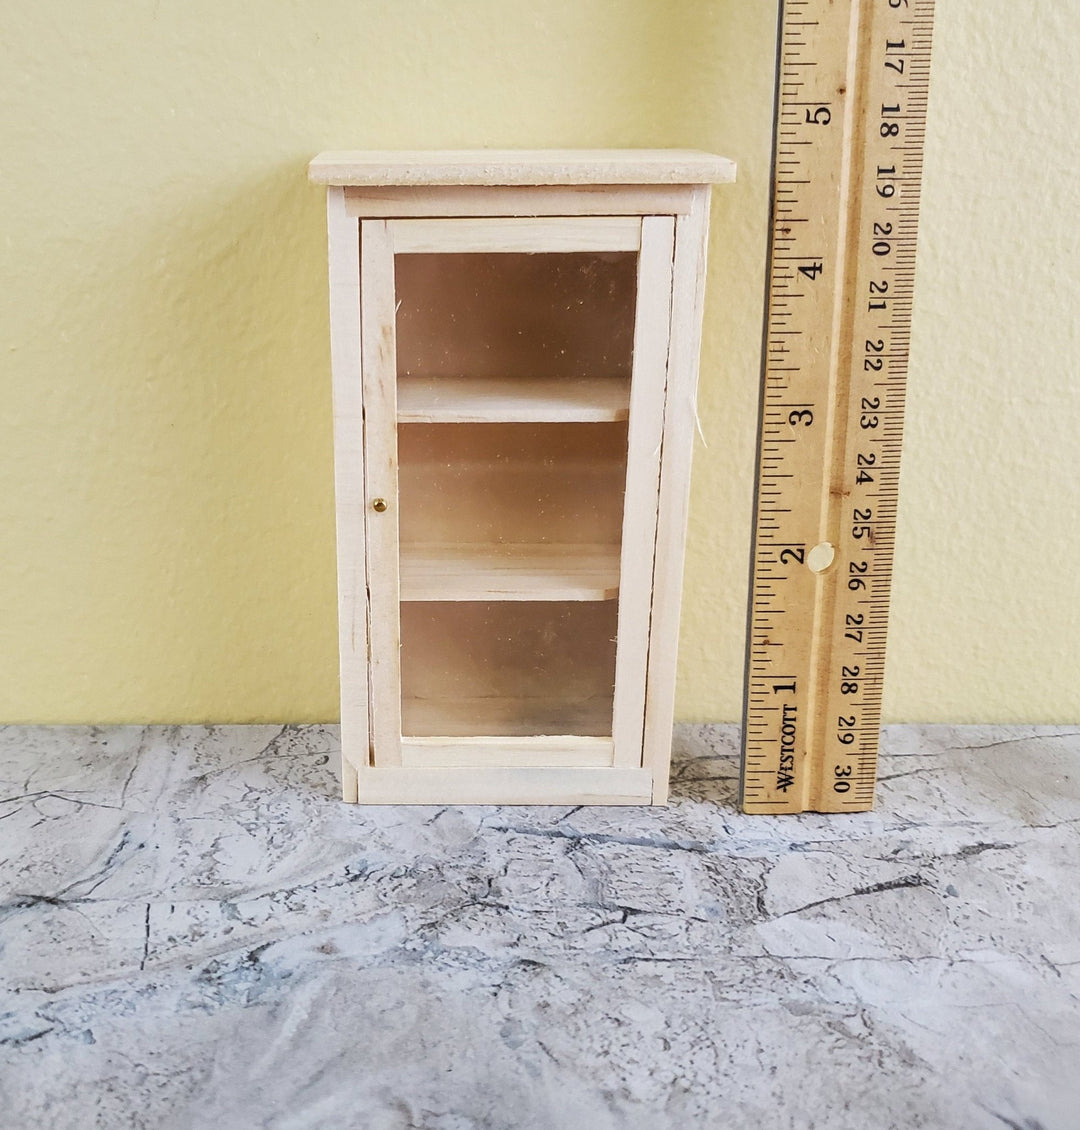 Dollhouse Jelly or Larder Cabinet Cupboard 1:12 Scale Kitchen Furniture Unpainted - Miniature Crush